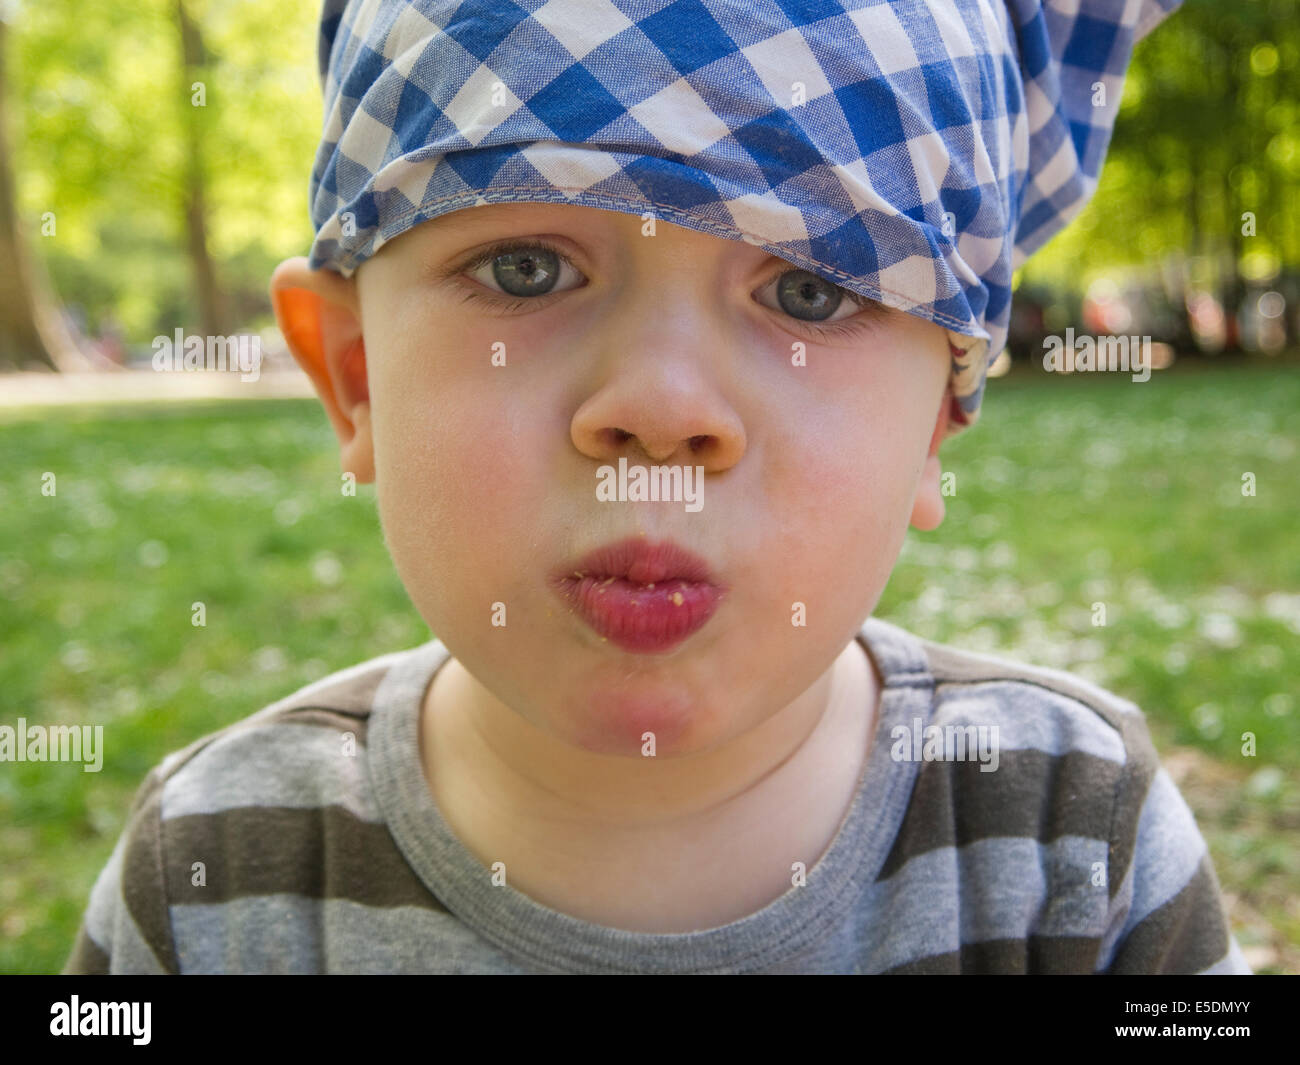 Baby boy wearing headscarf eating Stock Photo